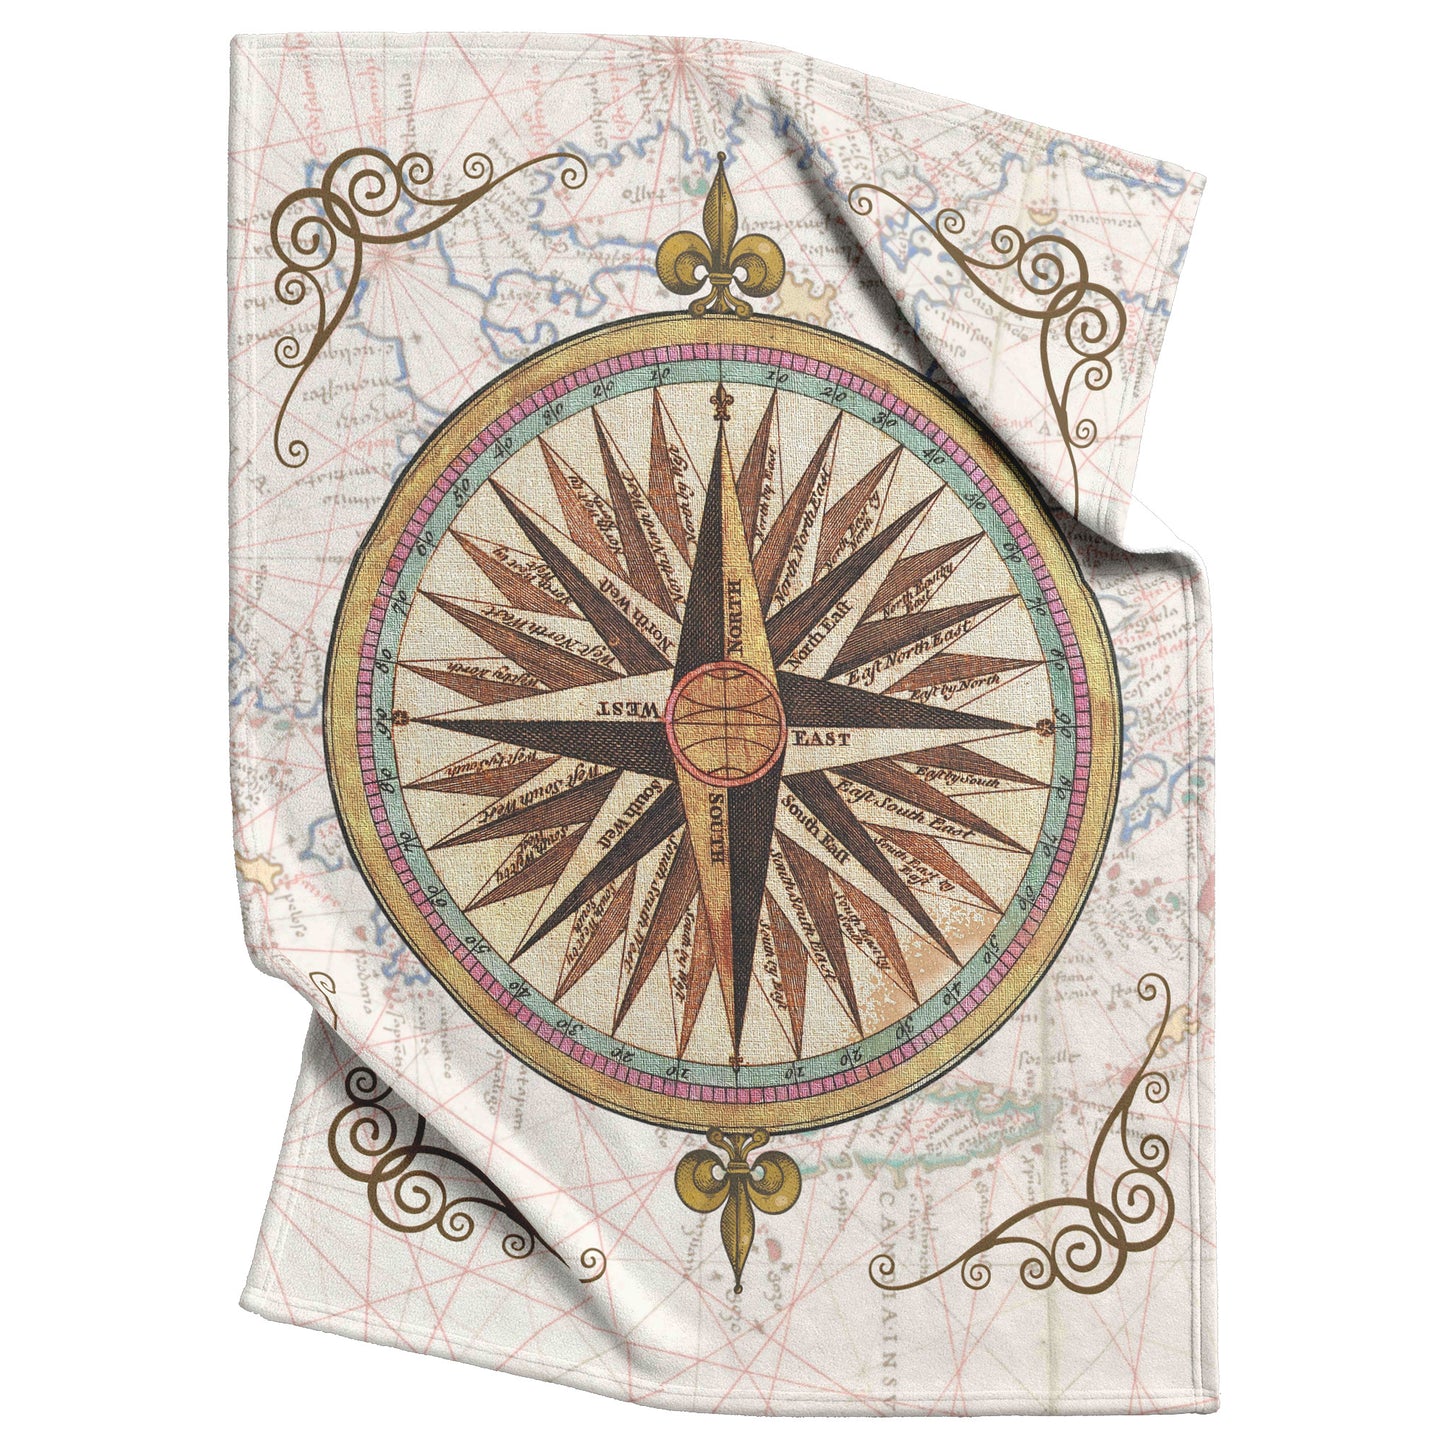 Compass Rose Fleece Blanket - Teal-Gold